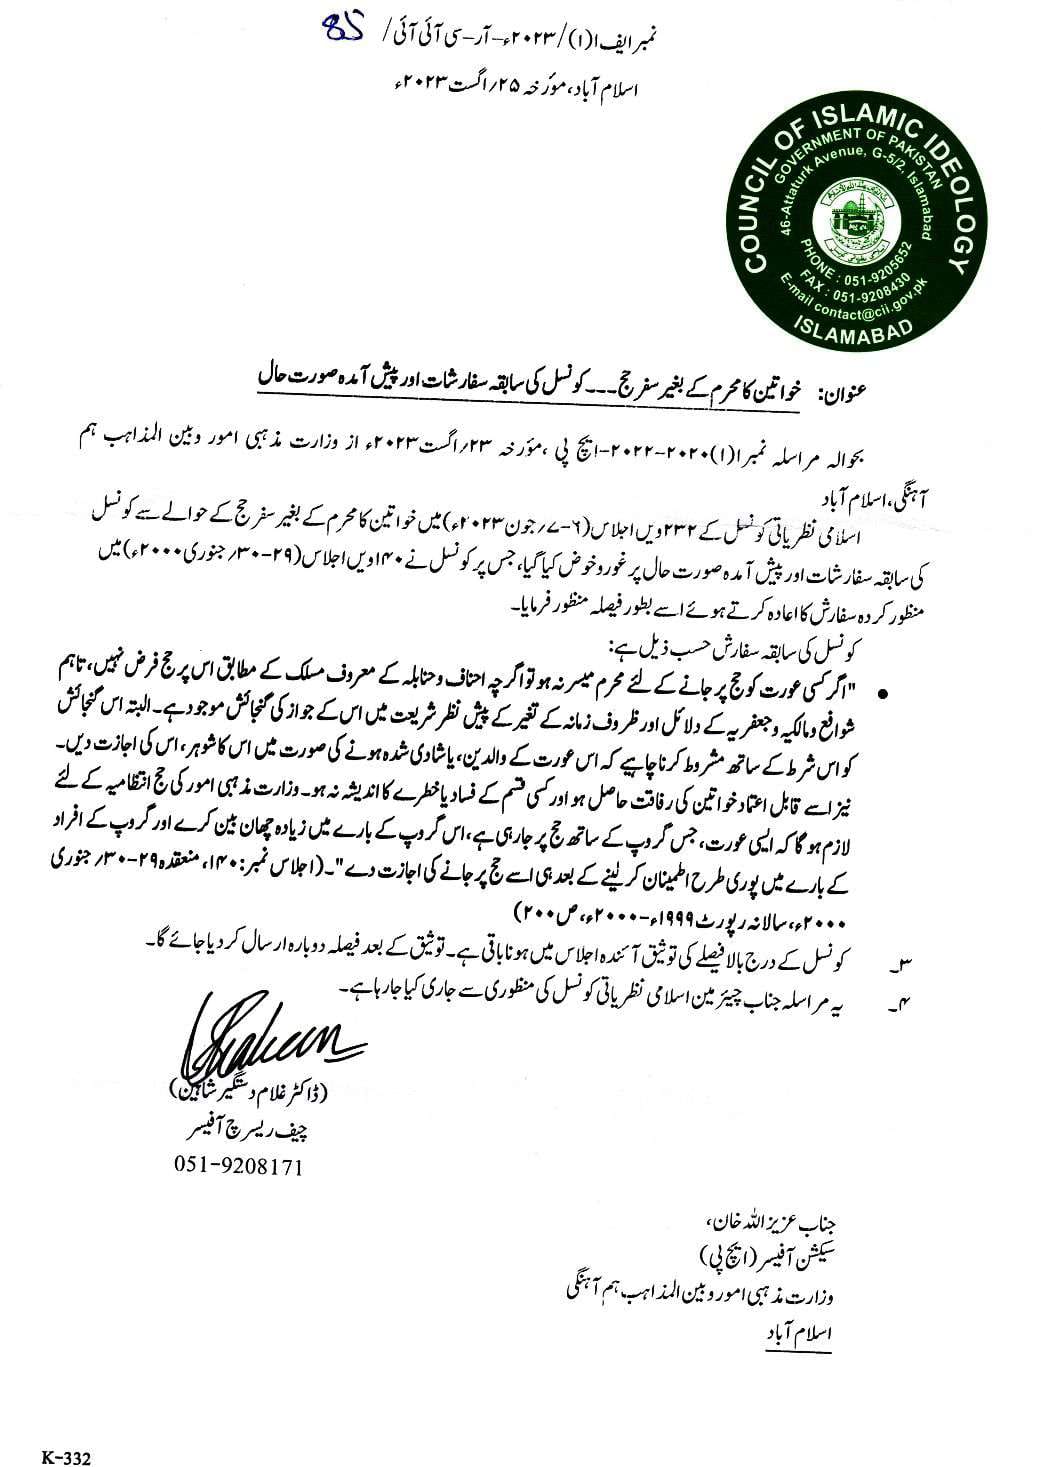 CII Hajj religious ministry letter